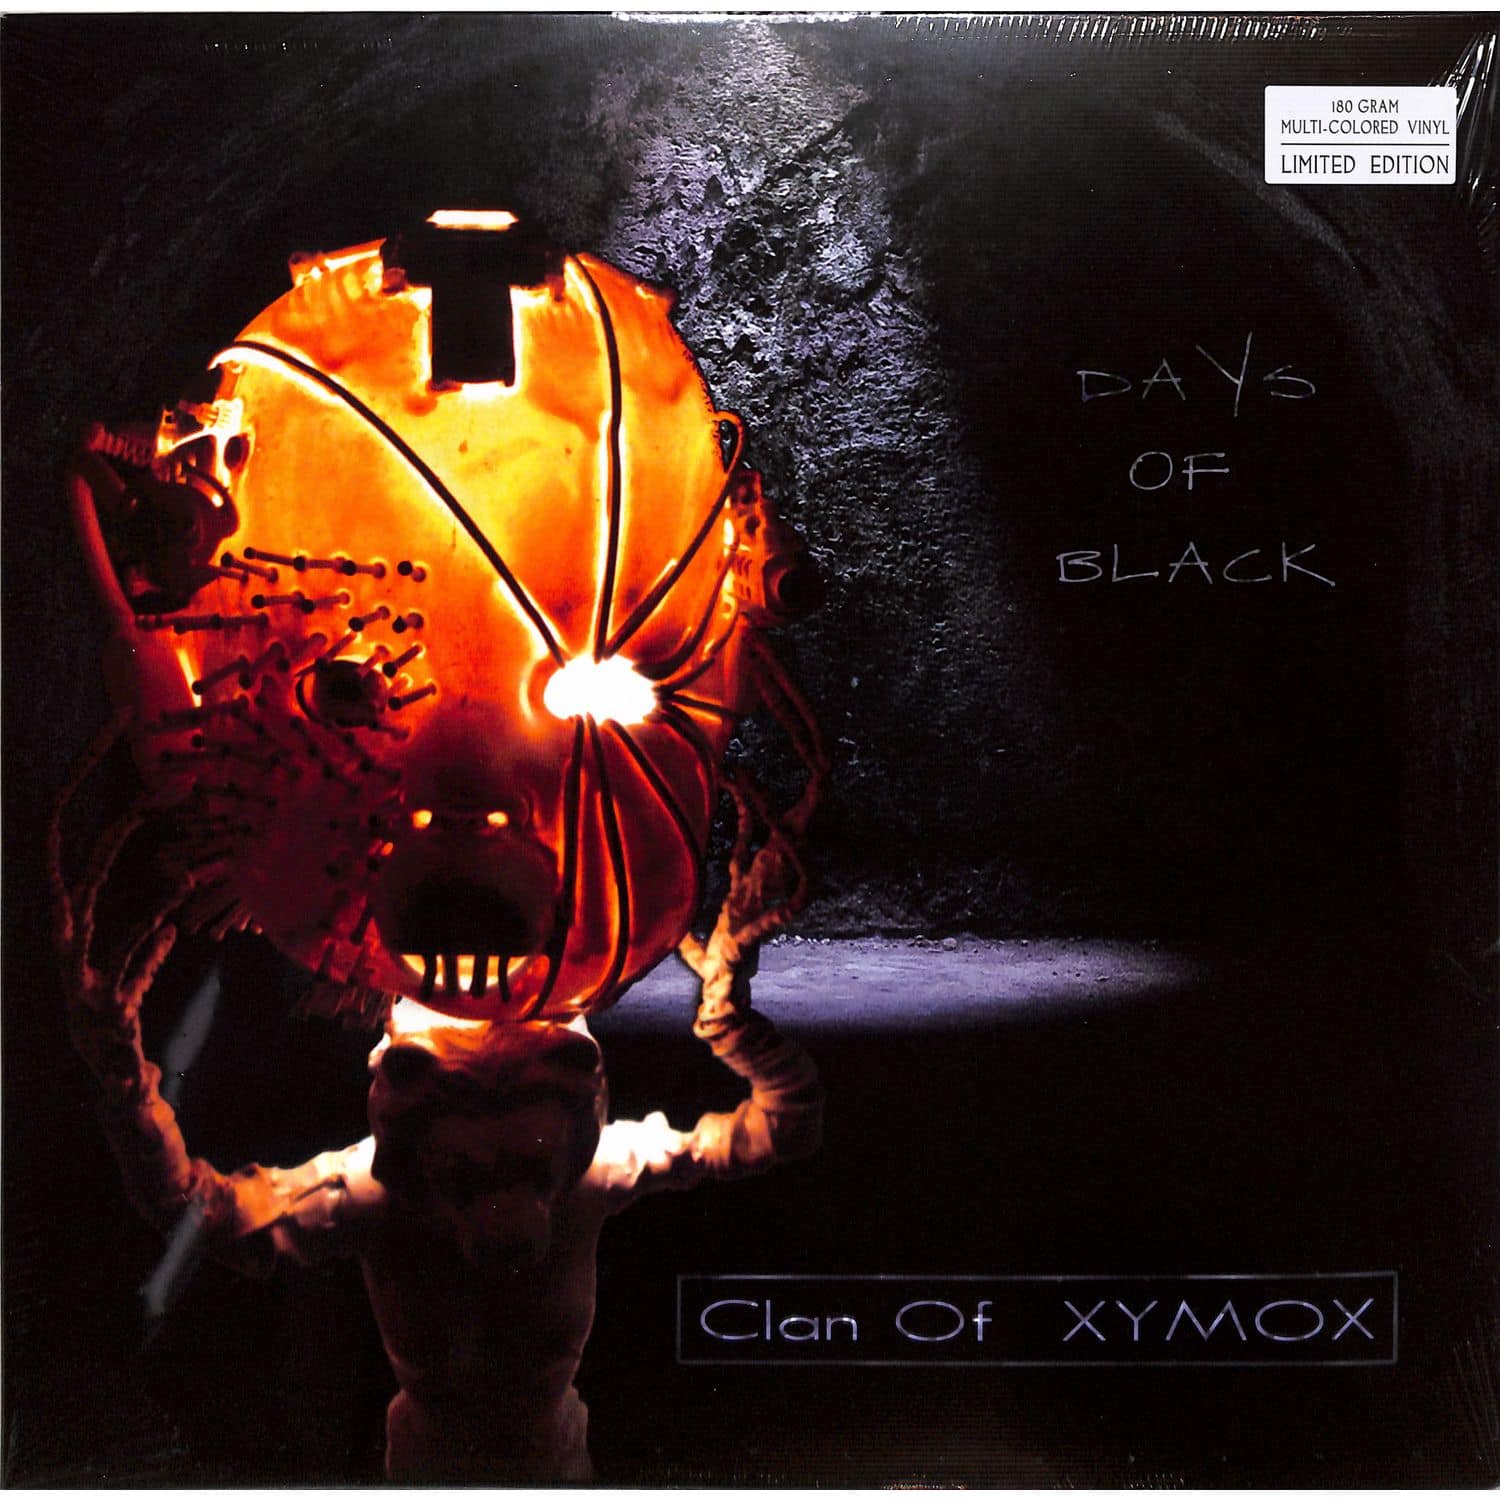 Clan Of Xymox - DAYS OF BLACK 